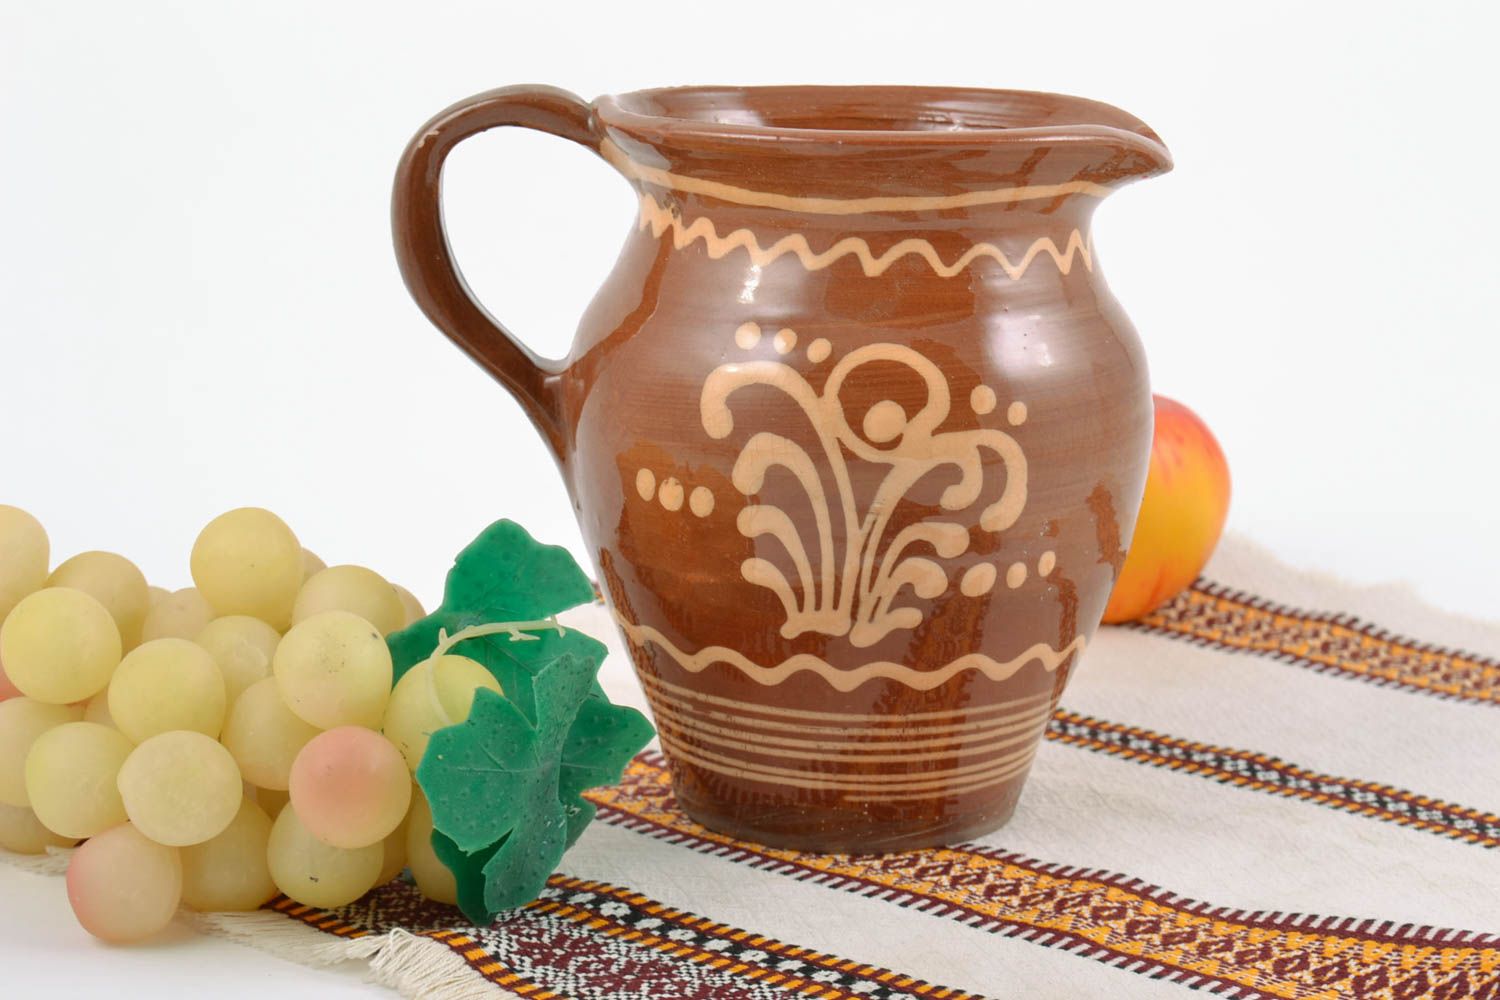 20 oz ceramic porcelain milk jug with handle and painted ornament 1,14 lb photo 1